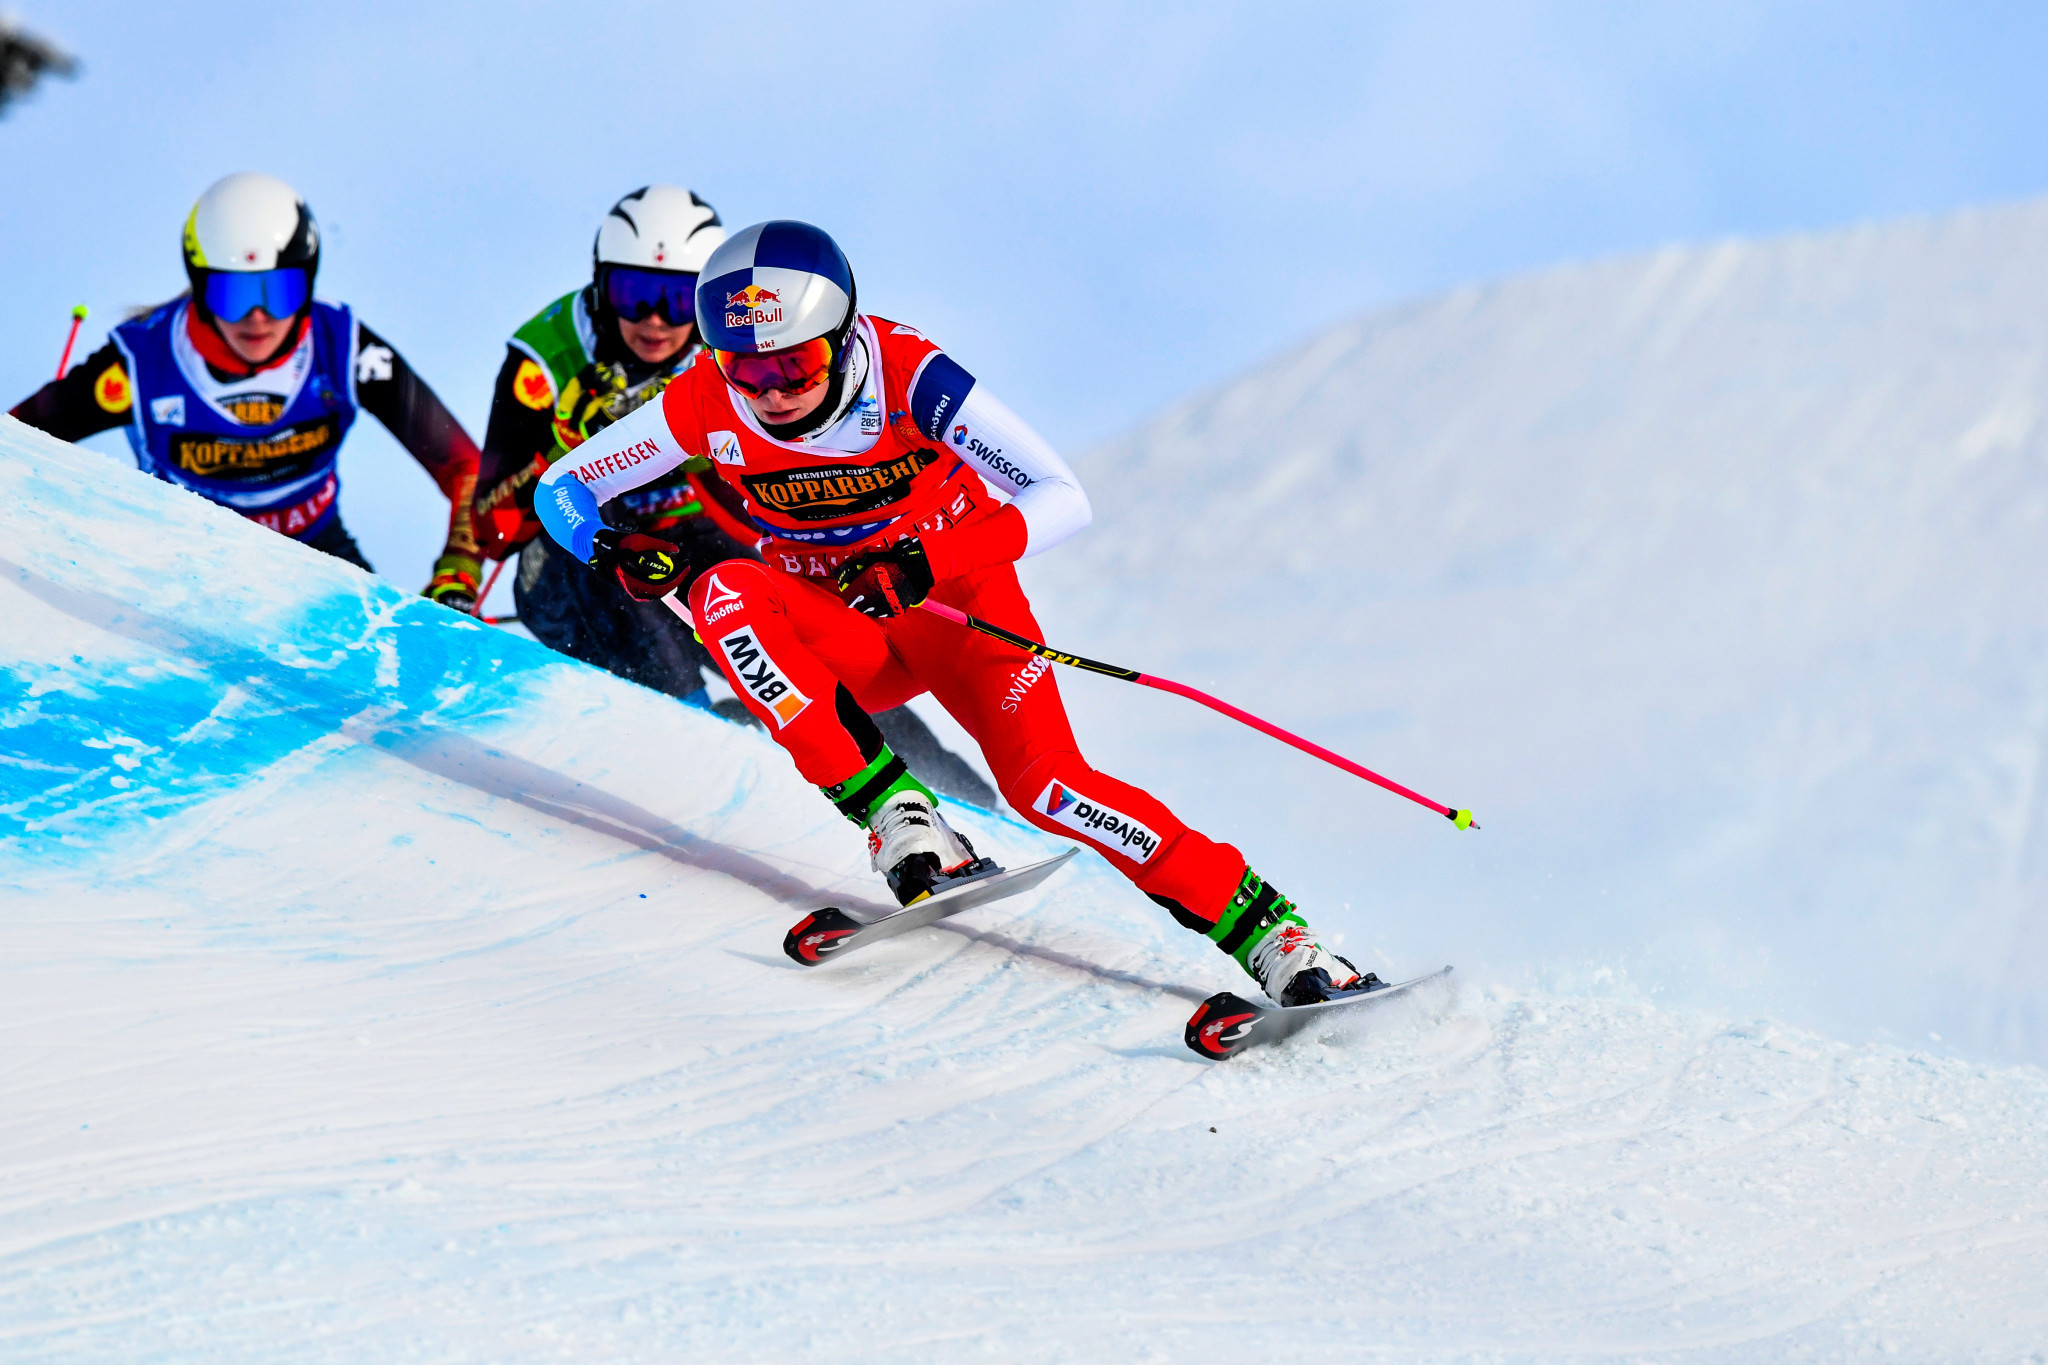 FIS Ski Cross World Cup to resume in Bakuriani as end of season nears